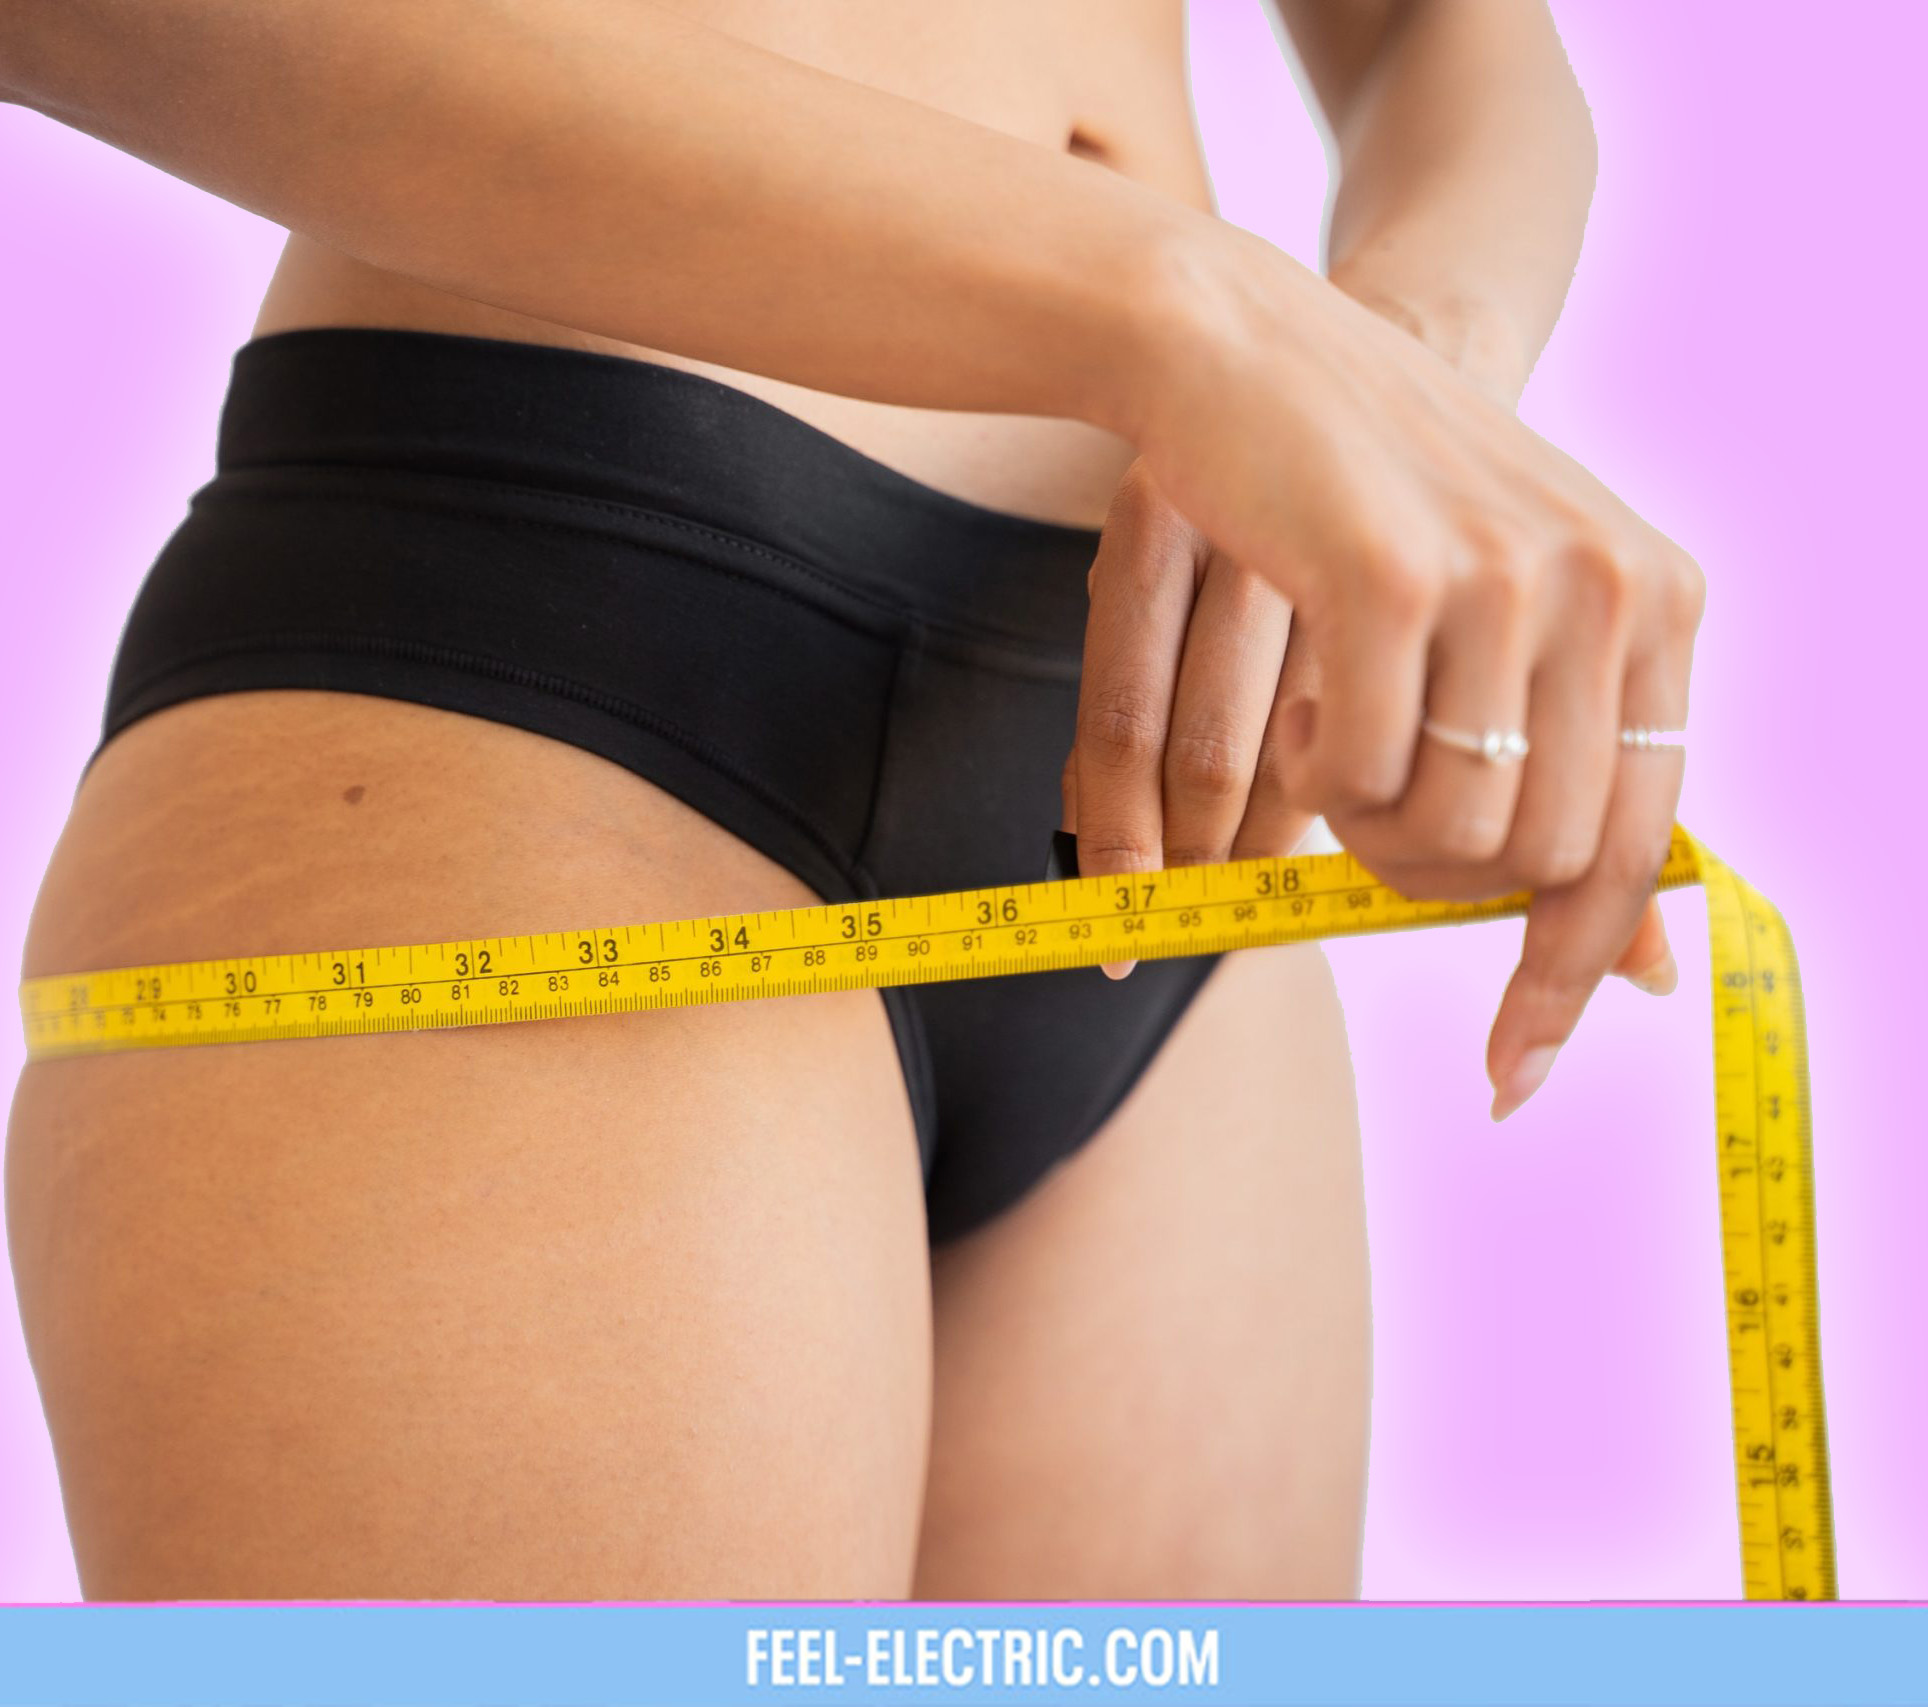 Body fat measuring body fat percentage analysis body scan feel electric